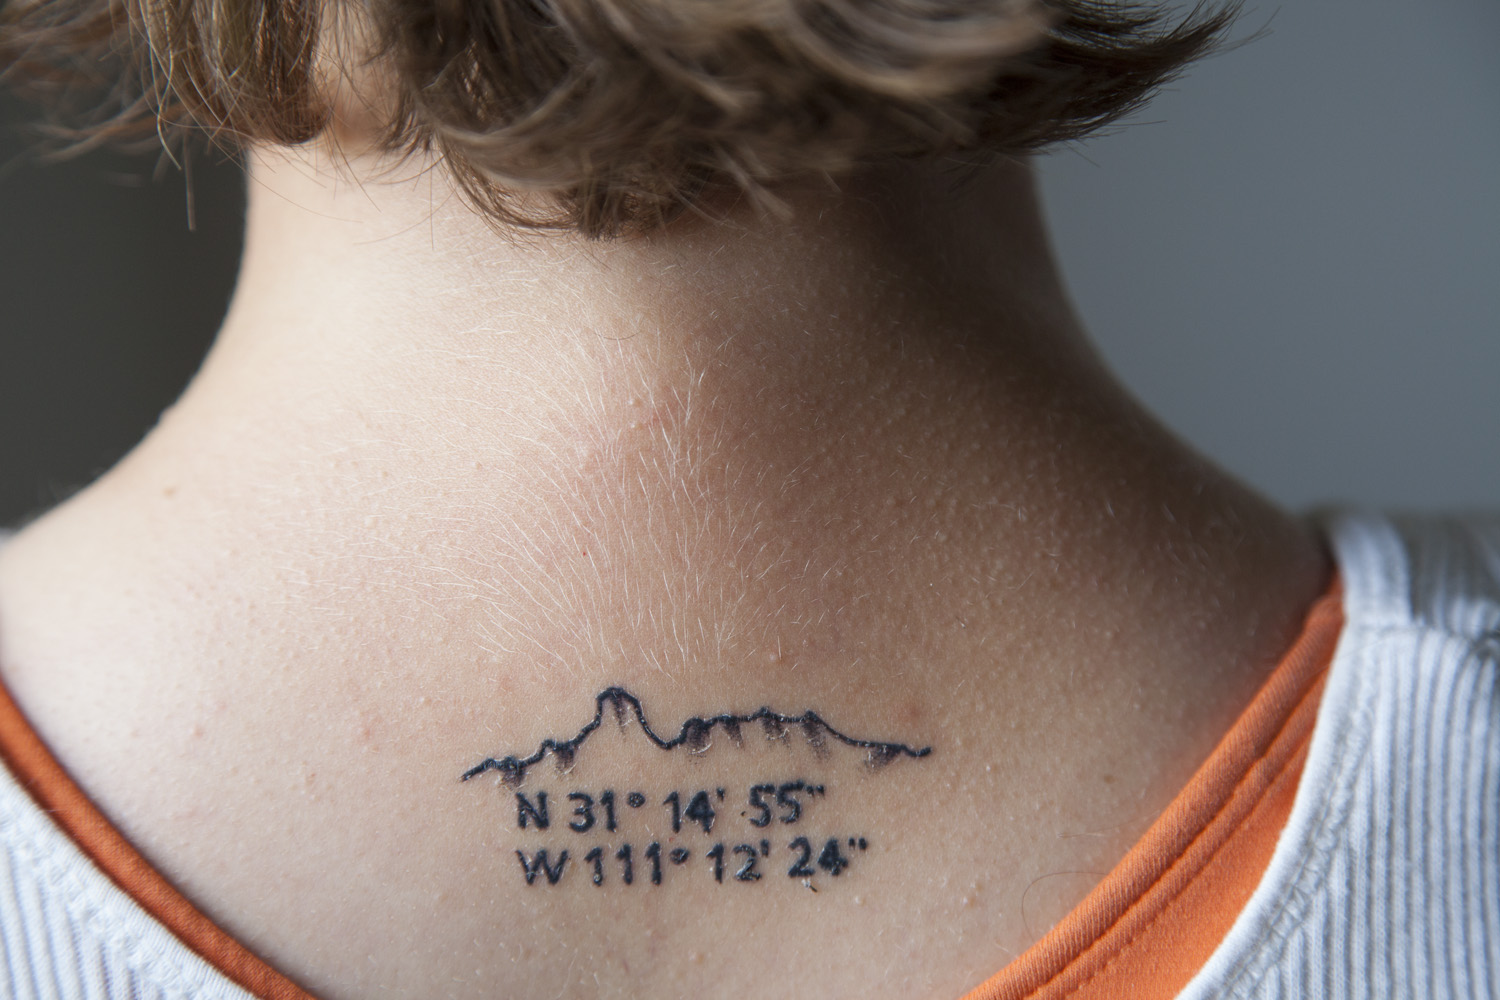  Tattoo #1, 2012 - Tattoo depicting Bavoquibari Mountain and GPS coordinates 